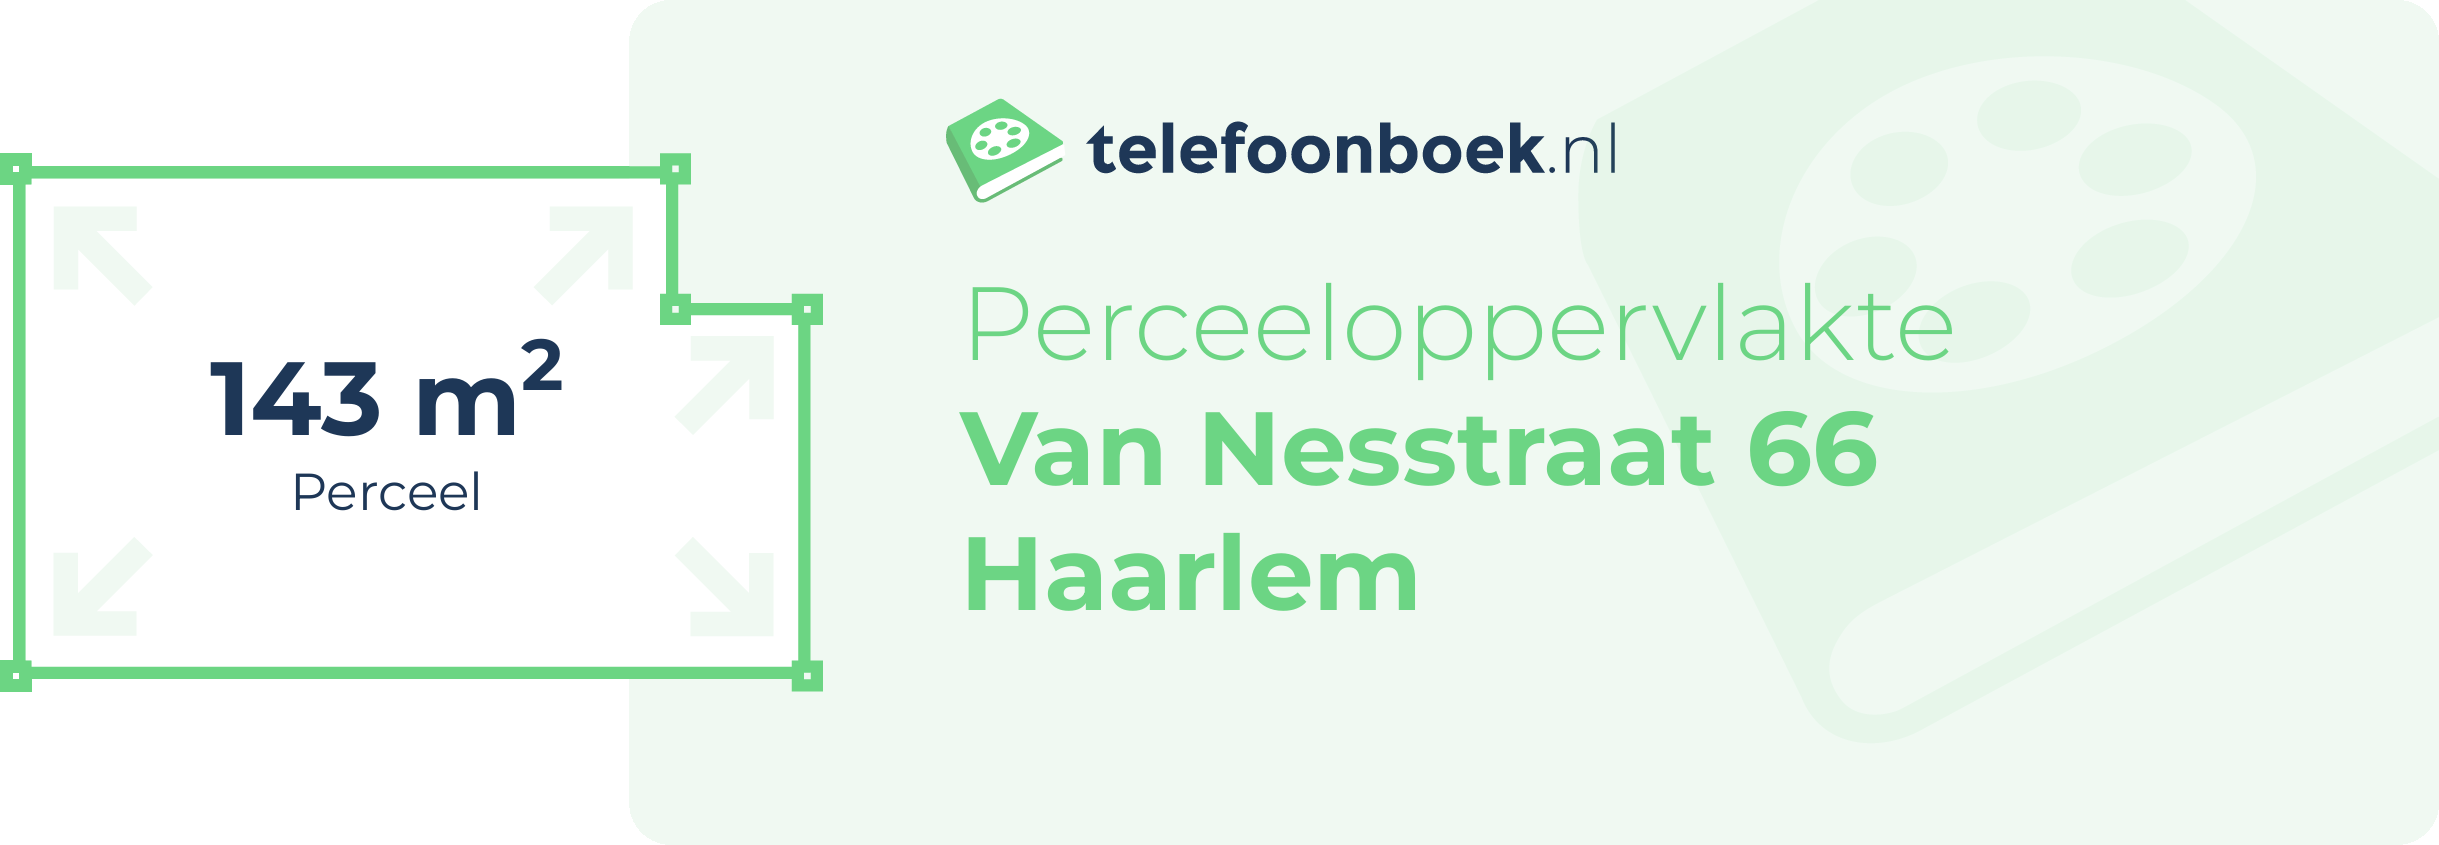 Perceeloppervlakte Van Nesstraat 66 Haarlem